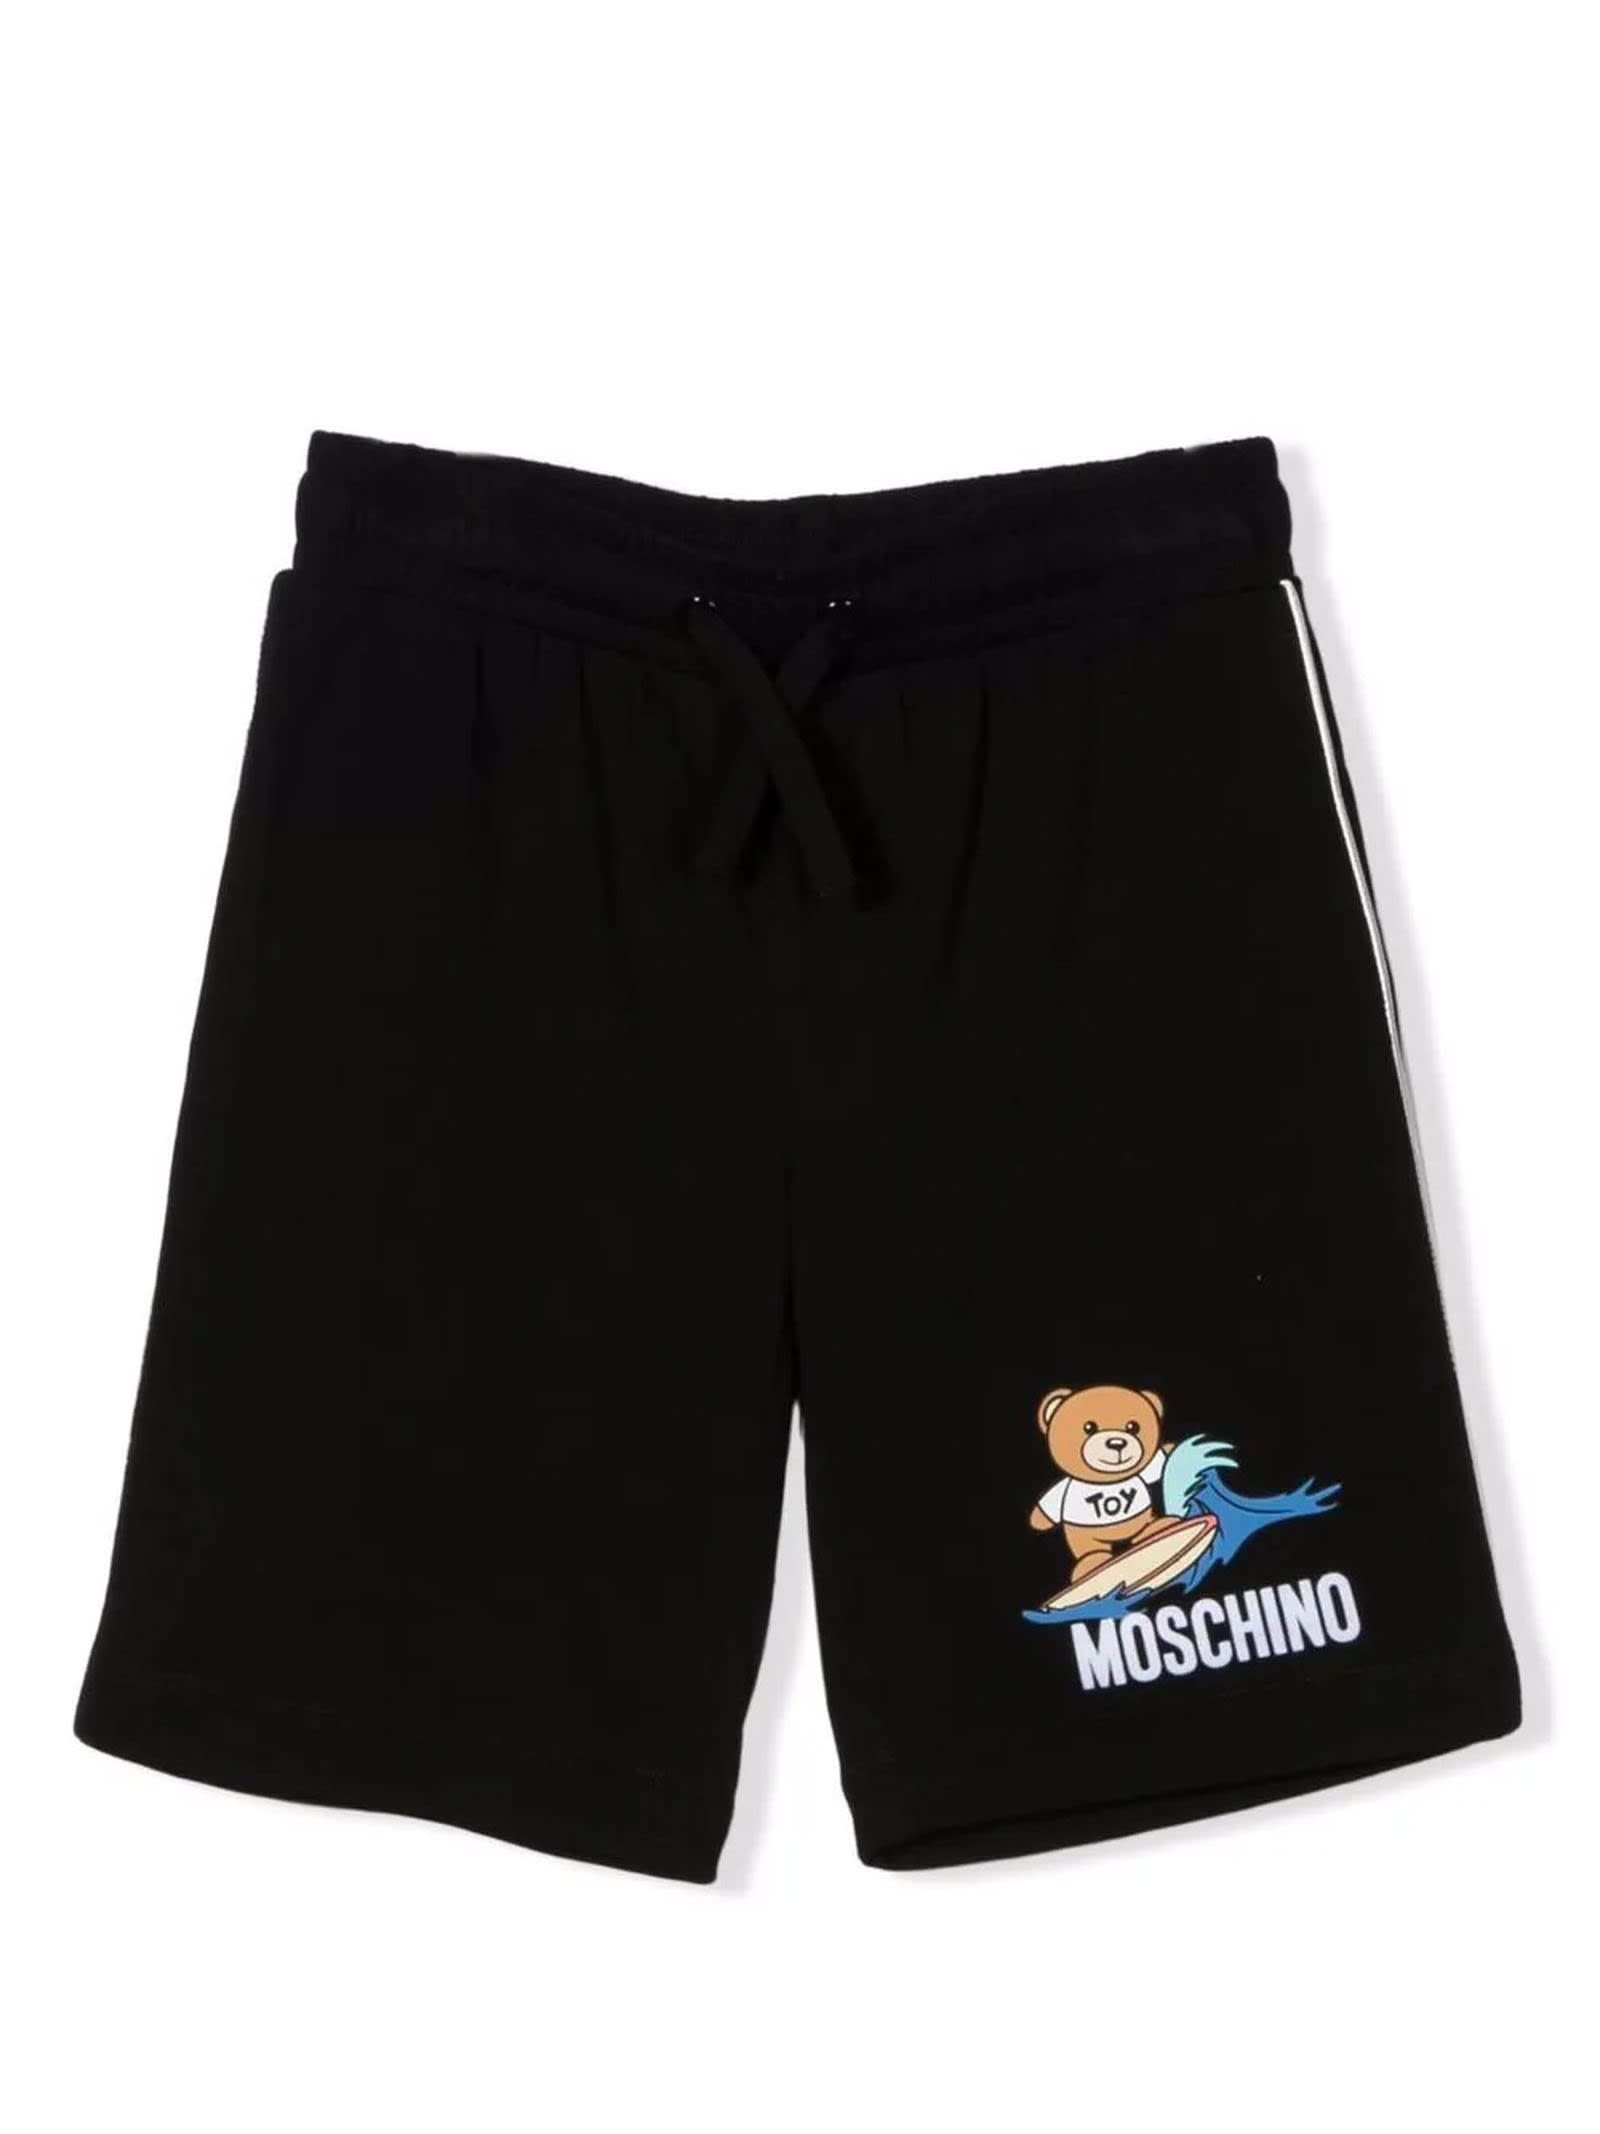 Moschino Black Cotton Shorts